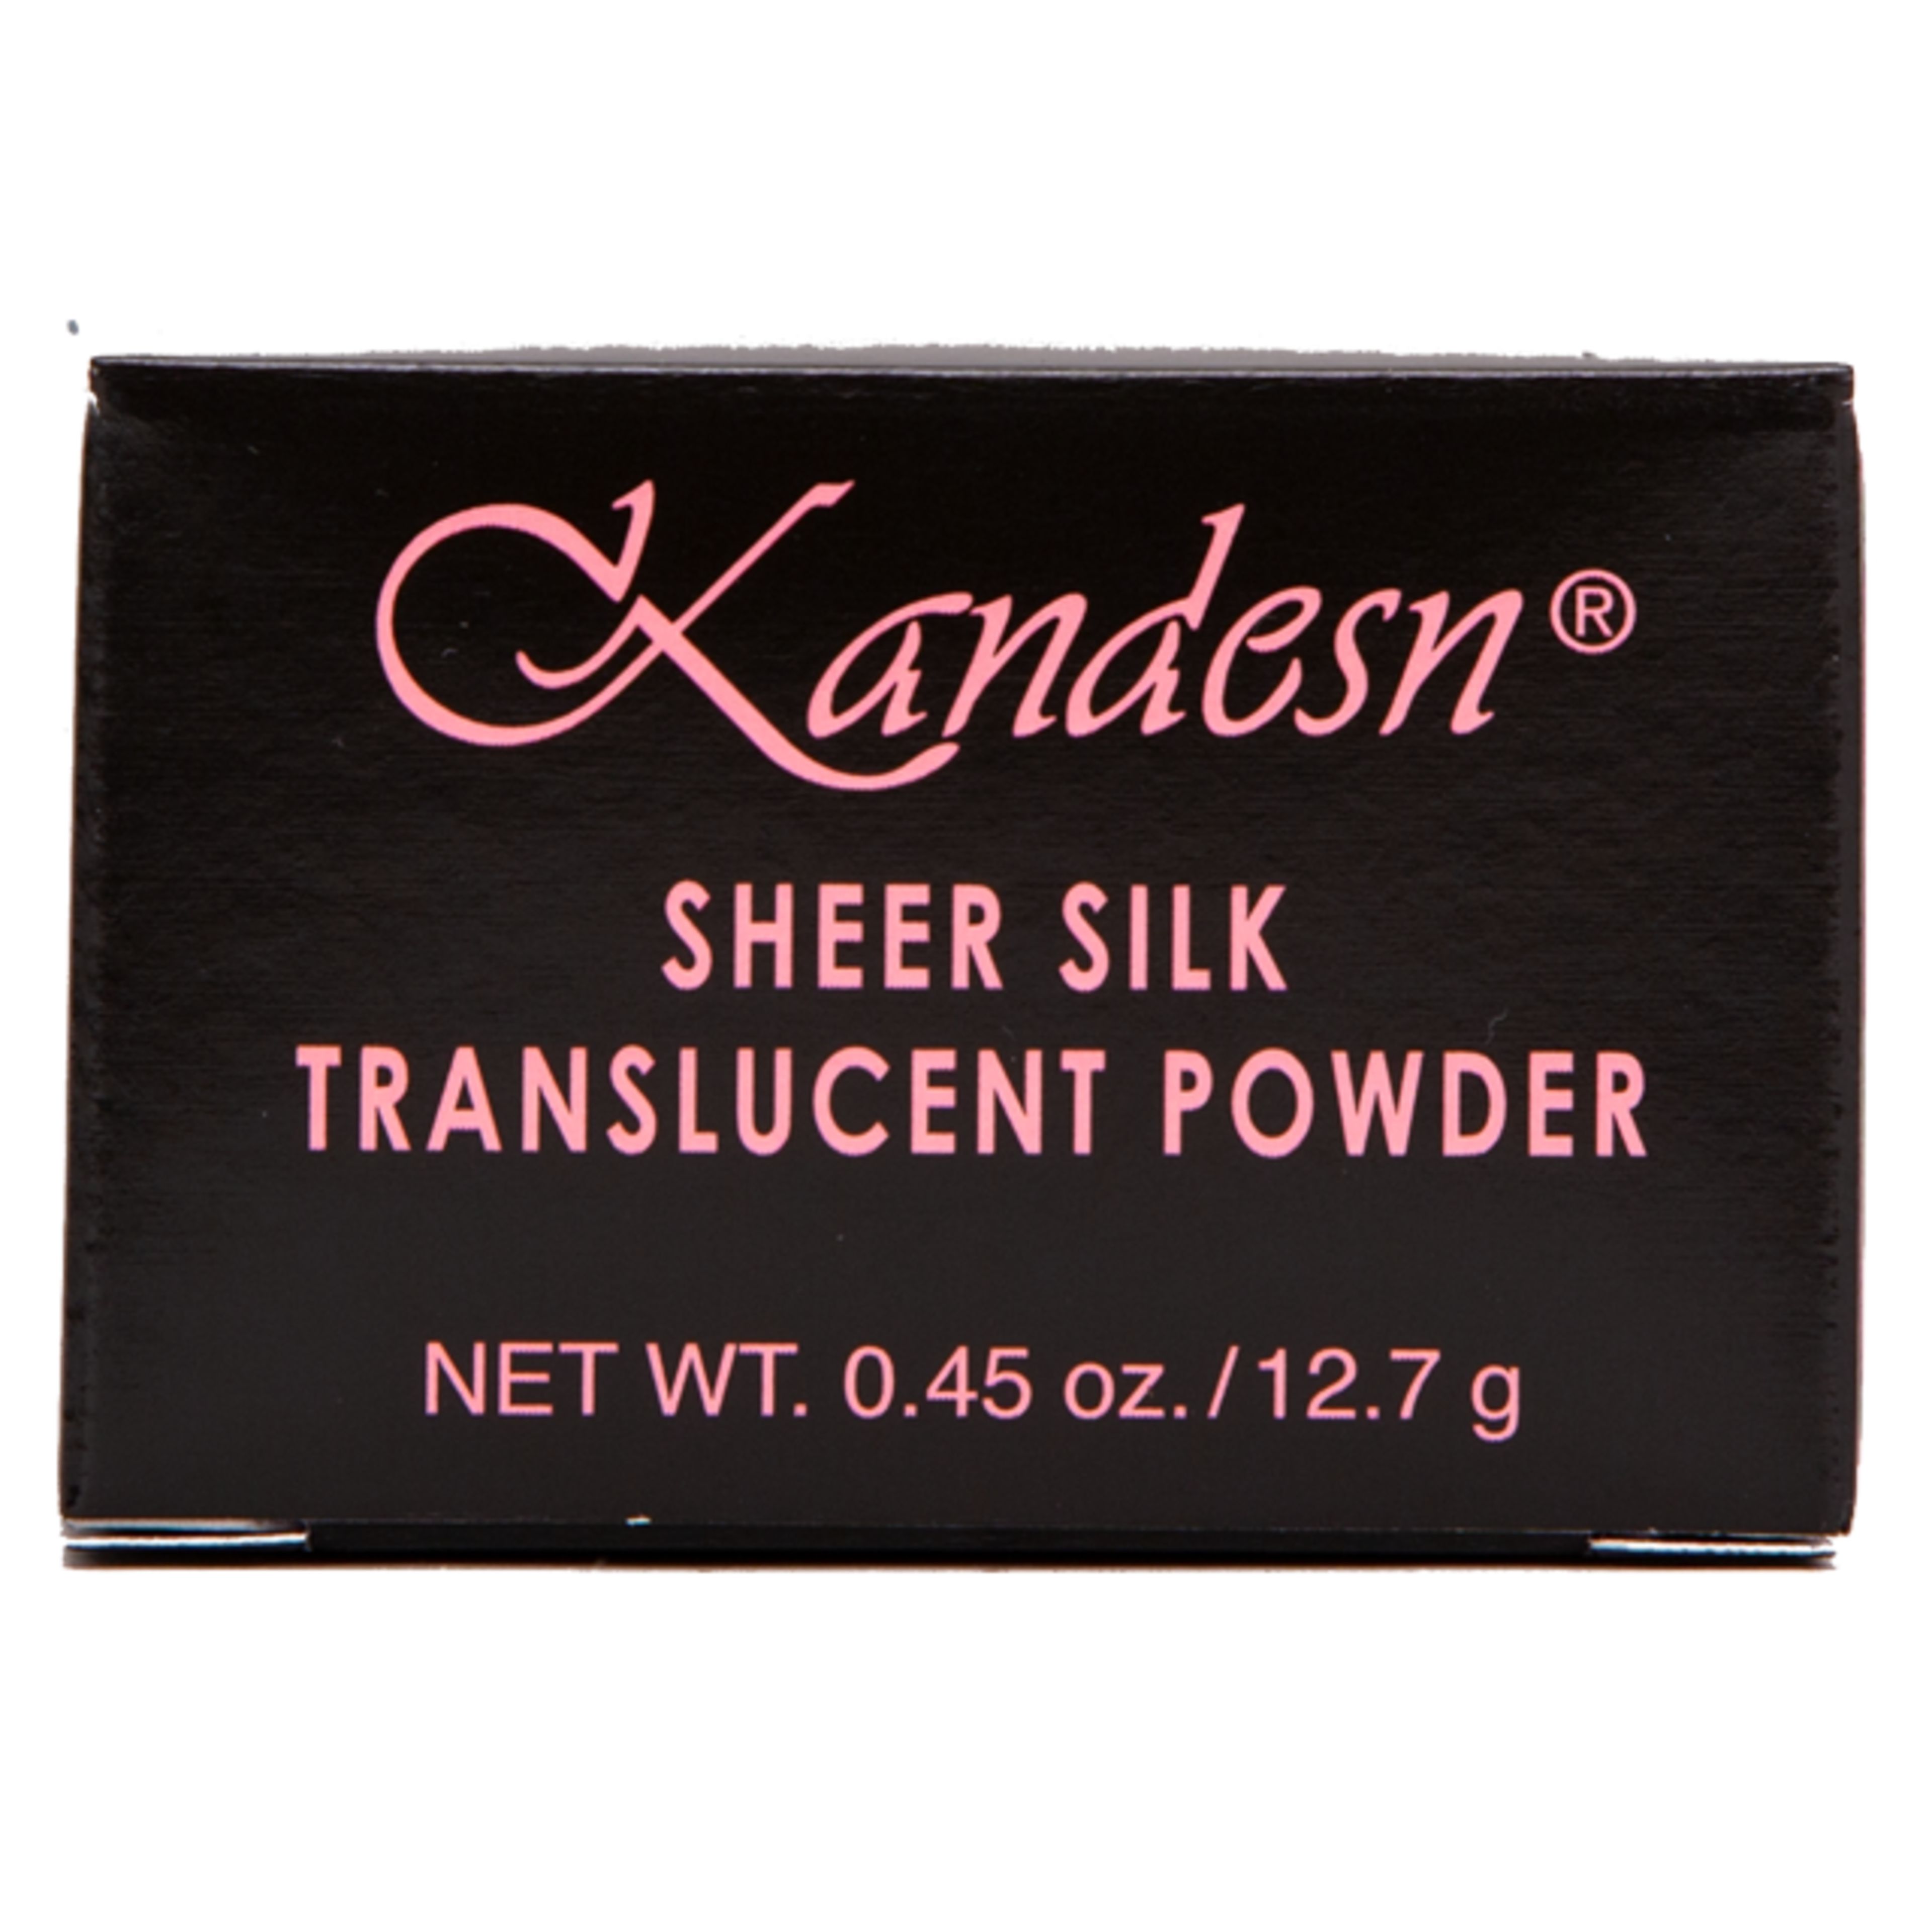 0117634-Kandesn-Sheer-Silk-Translucent-Powder-701.png